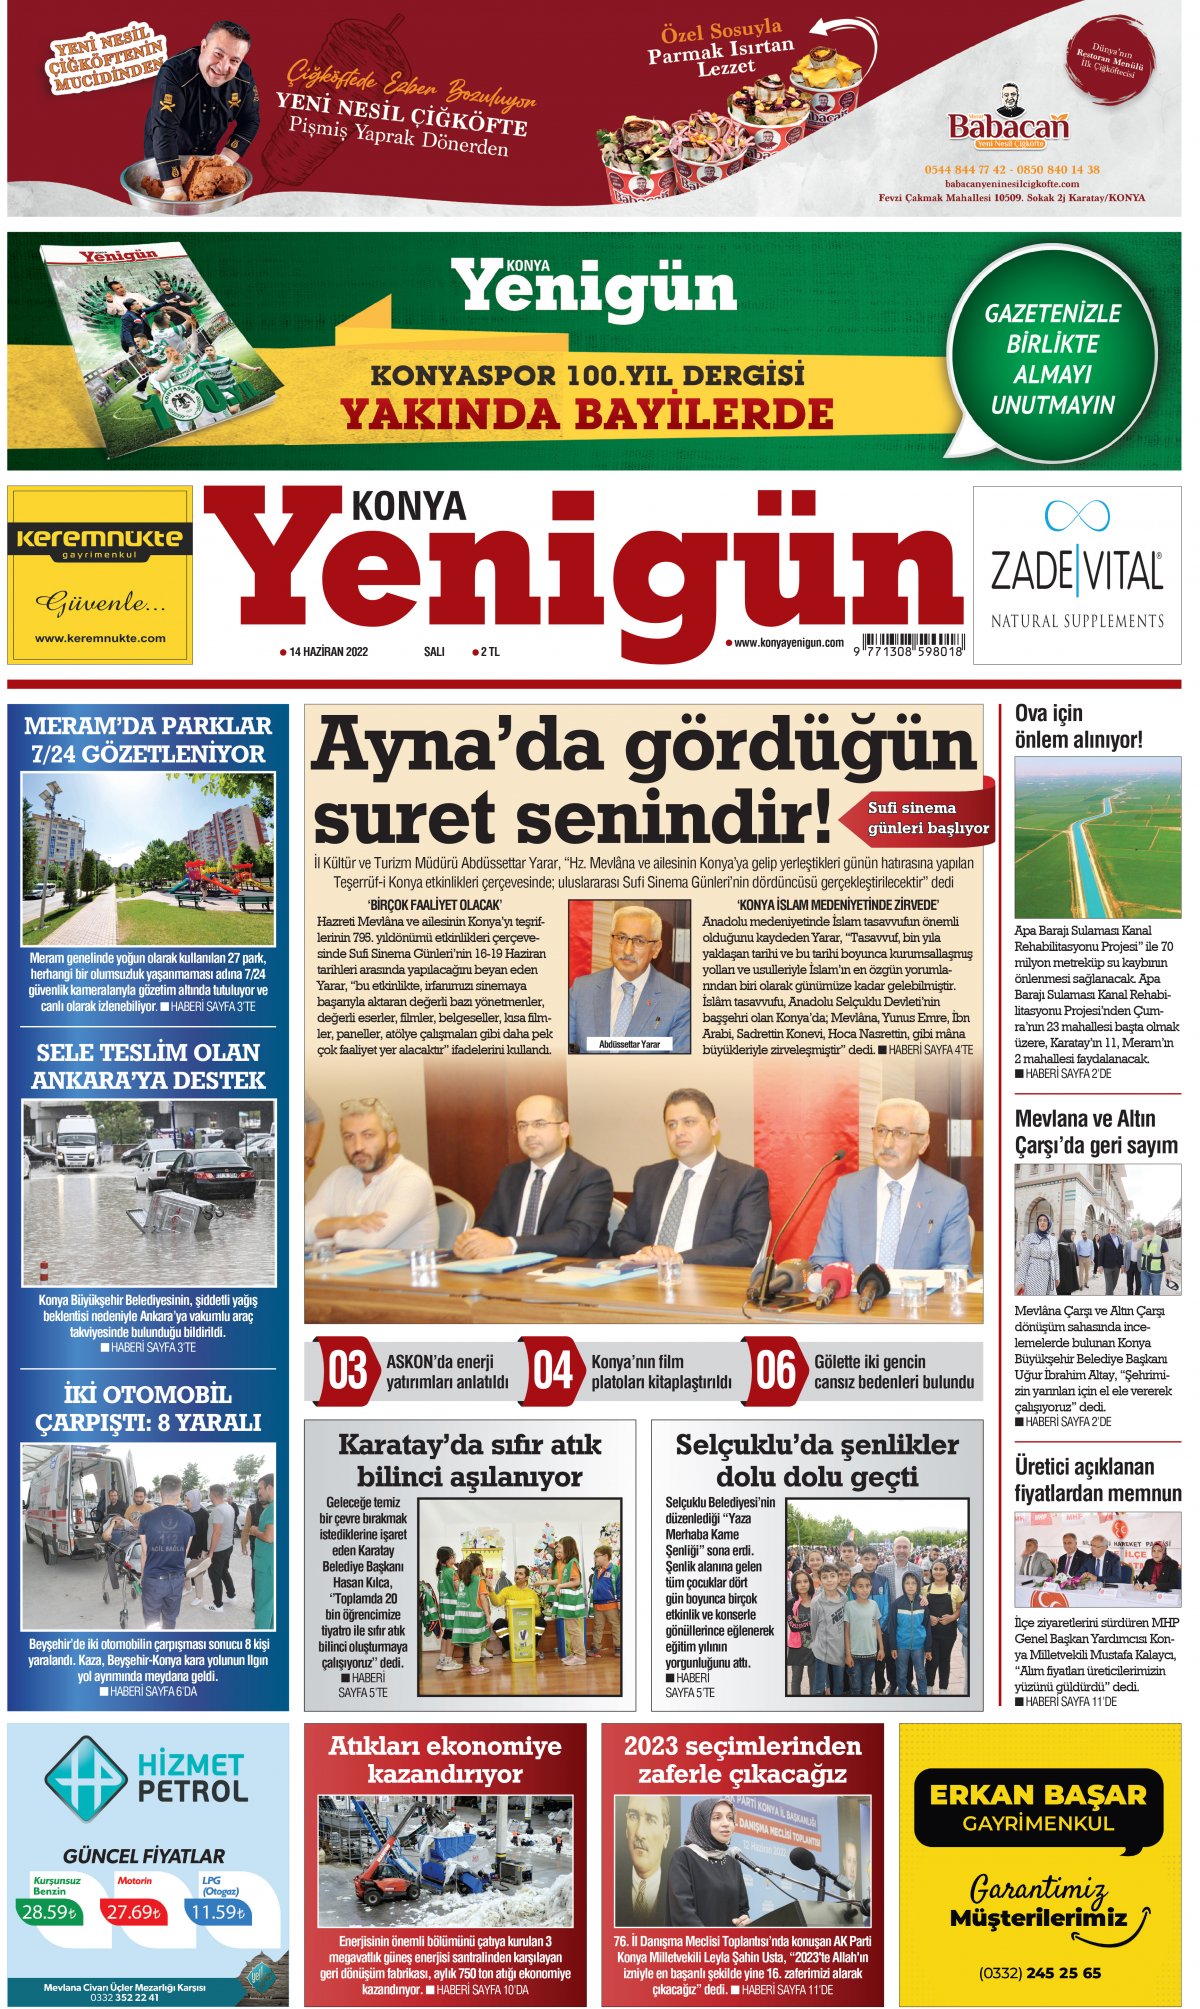 Konya Yenigün Gazetesi - 14.06.2022 Manşeti